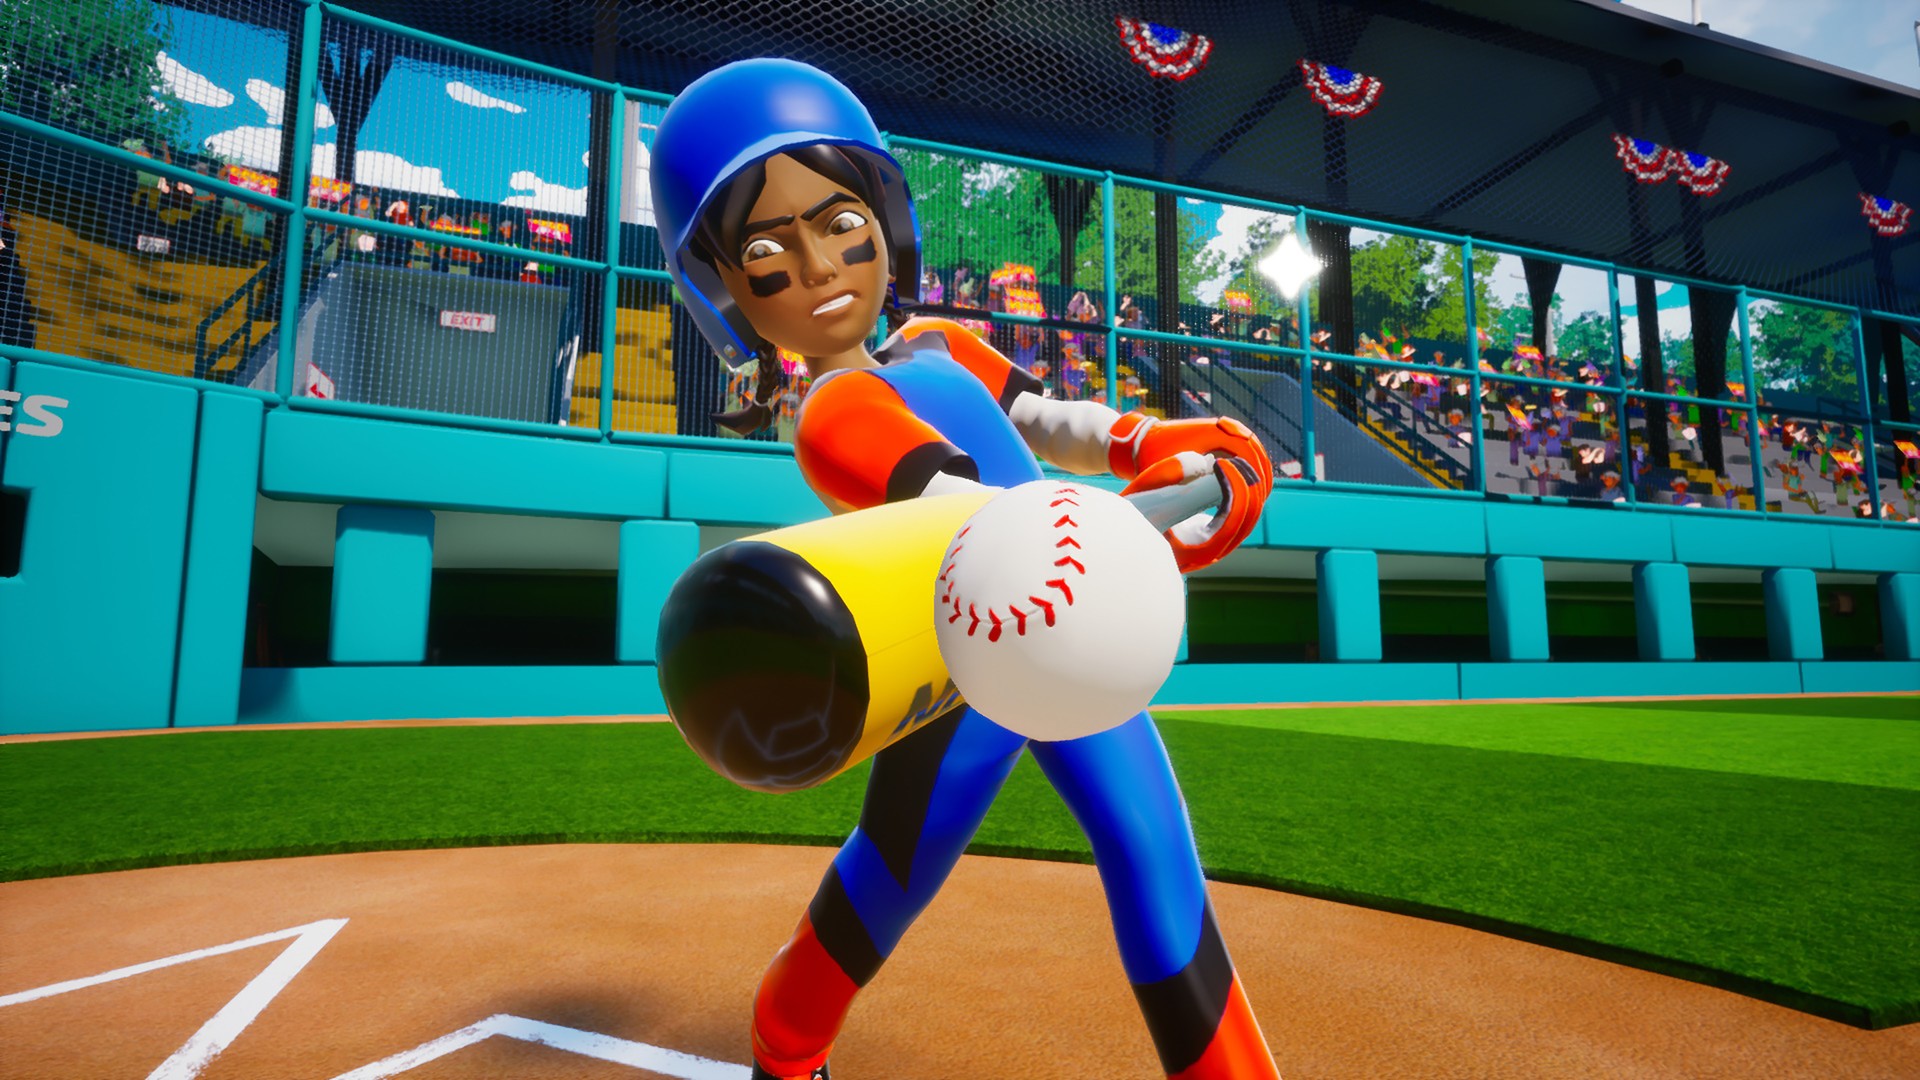 Little League World Series Baseball 2022 Steam CD Key 0.59 usd